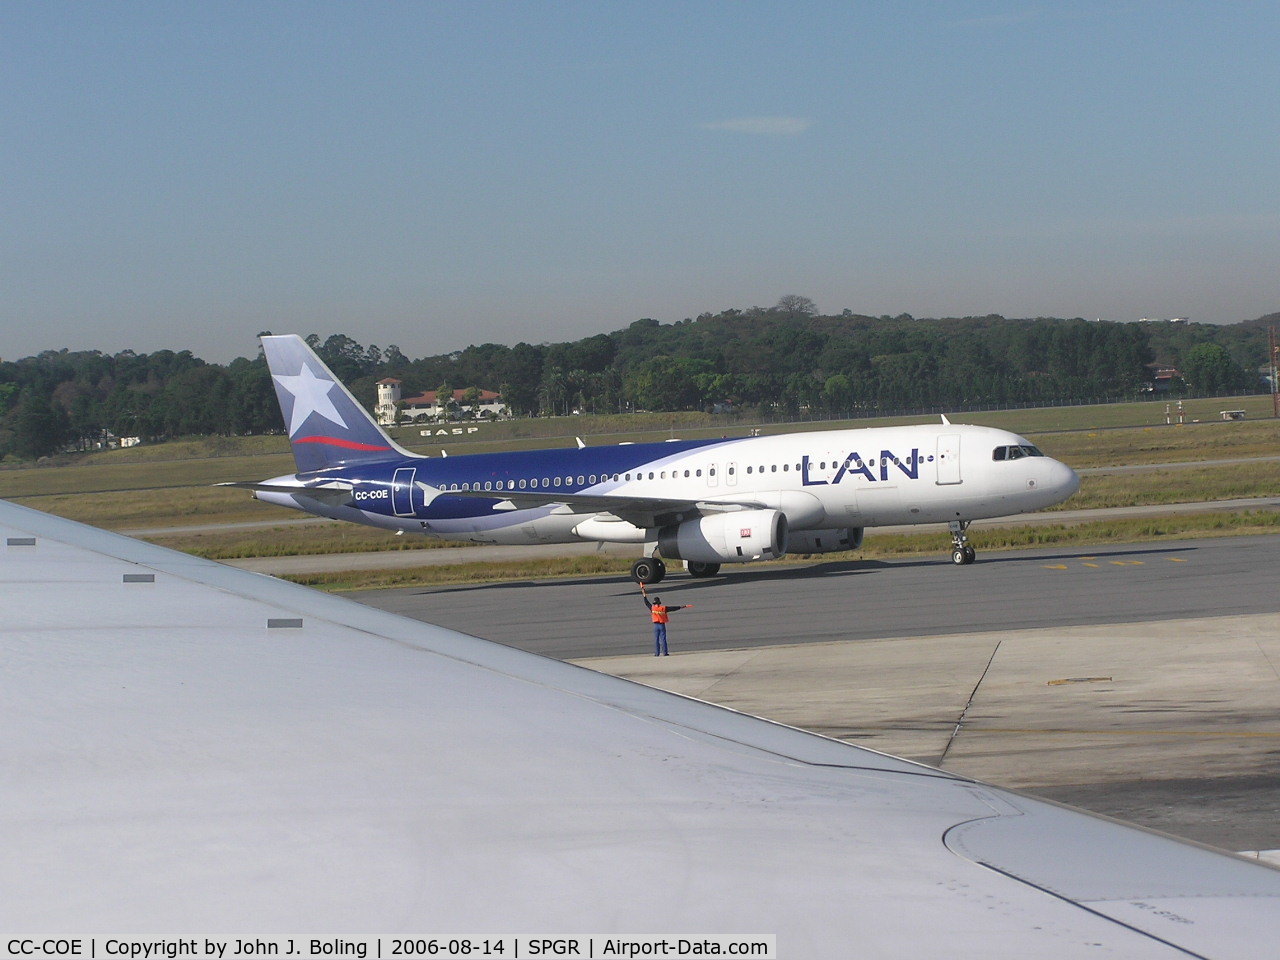 CC-COE, 2000 Airbus A320-233 C/N 1351, LAN Airbus at Sao Paulo, Brazil